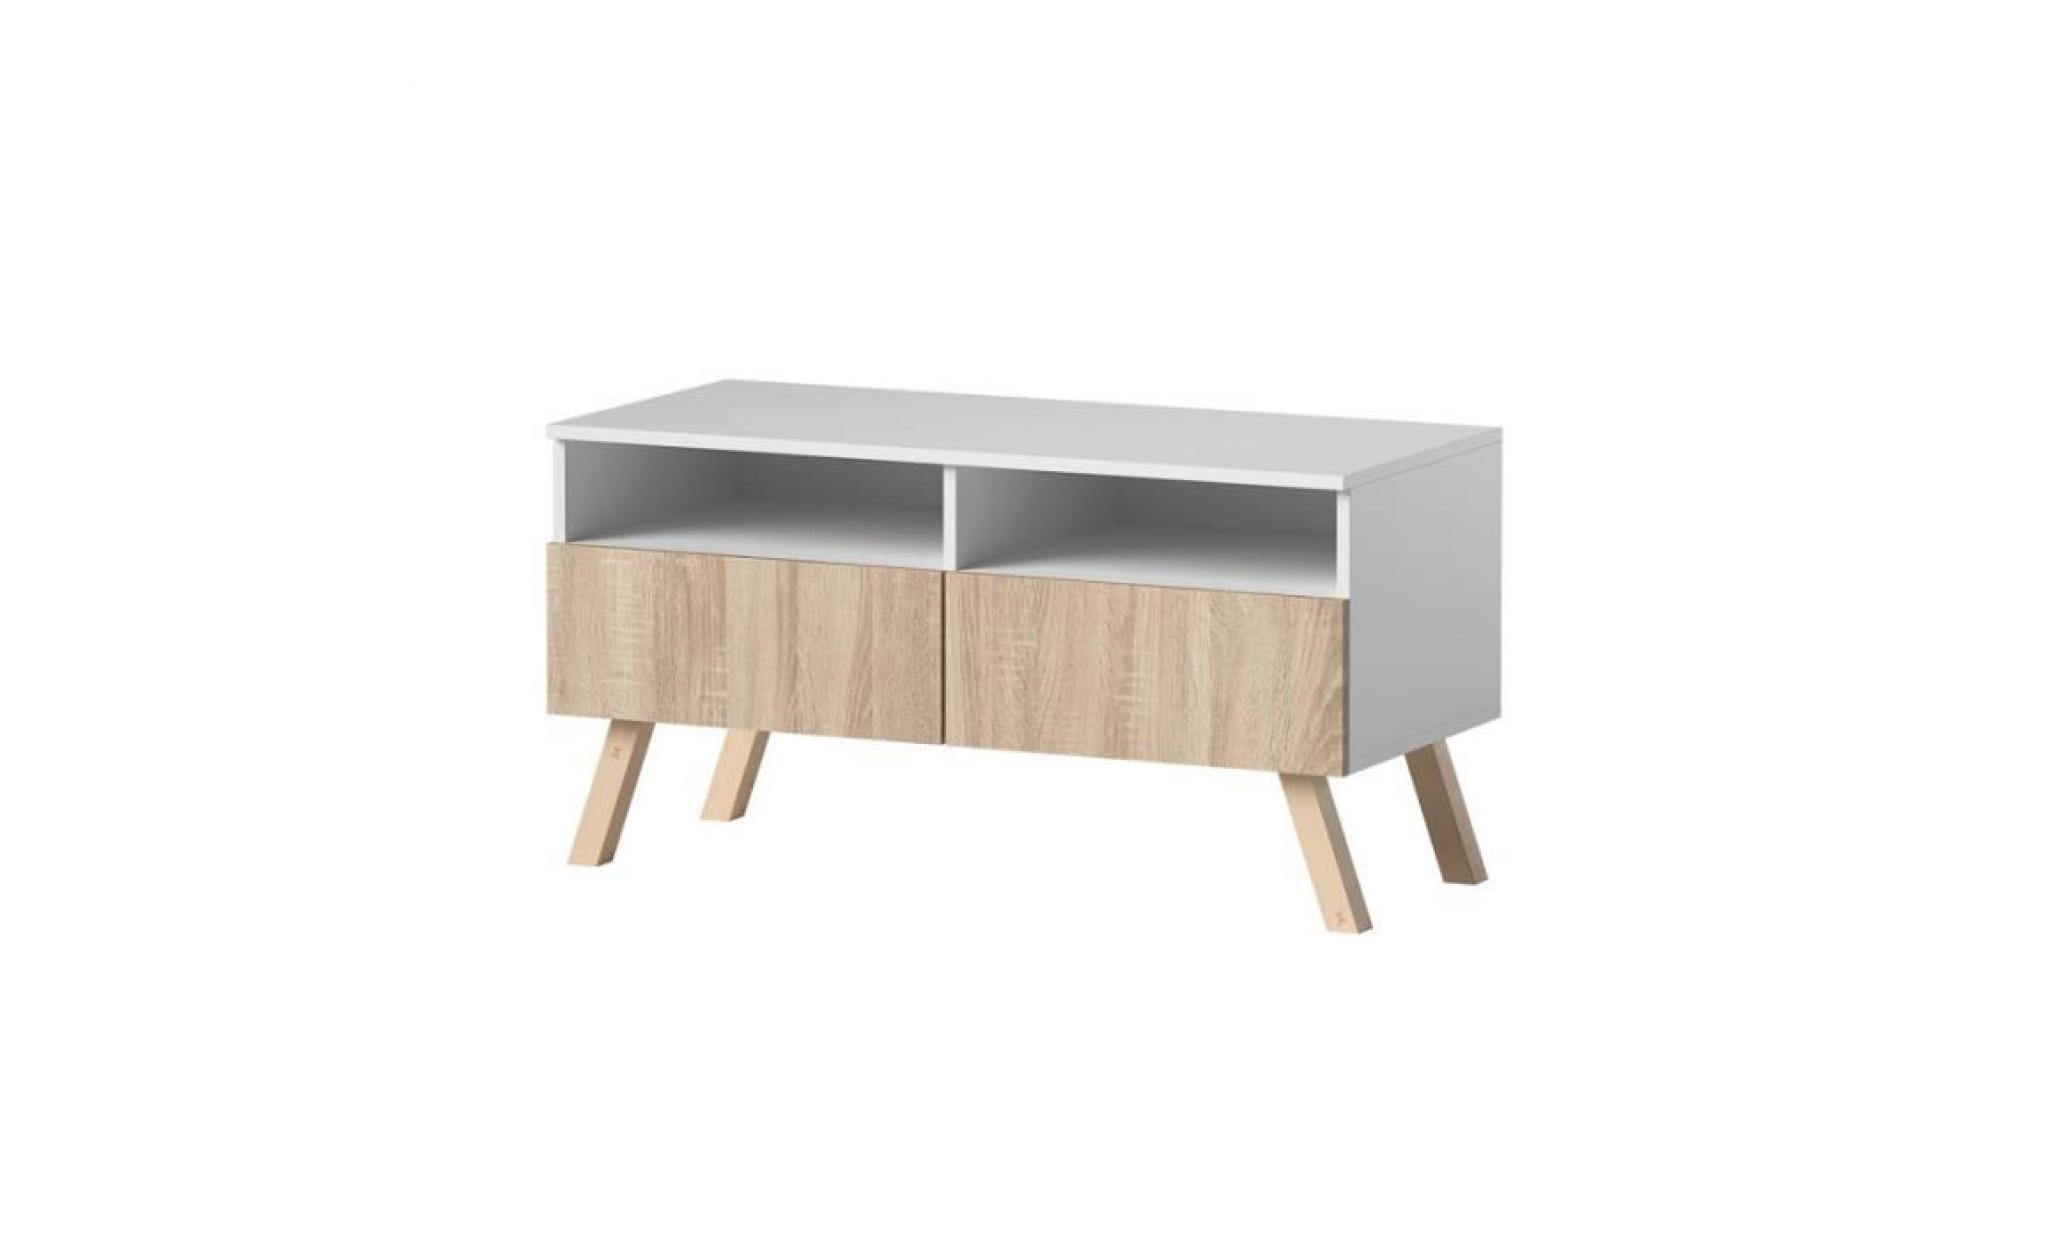 meuble tv / meuble salon   siena bois   100 cm   blanc mat / effet chêne   style scandi   forme minimaliste pas cher